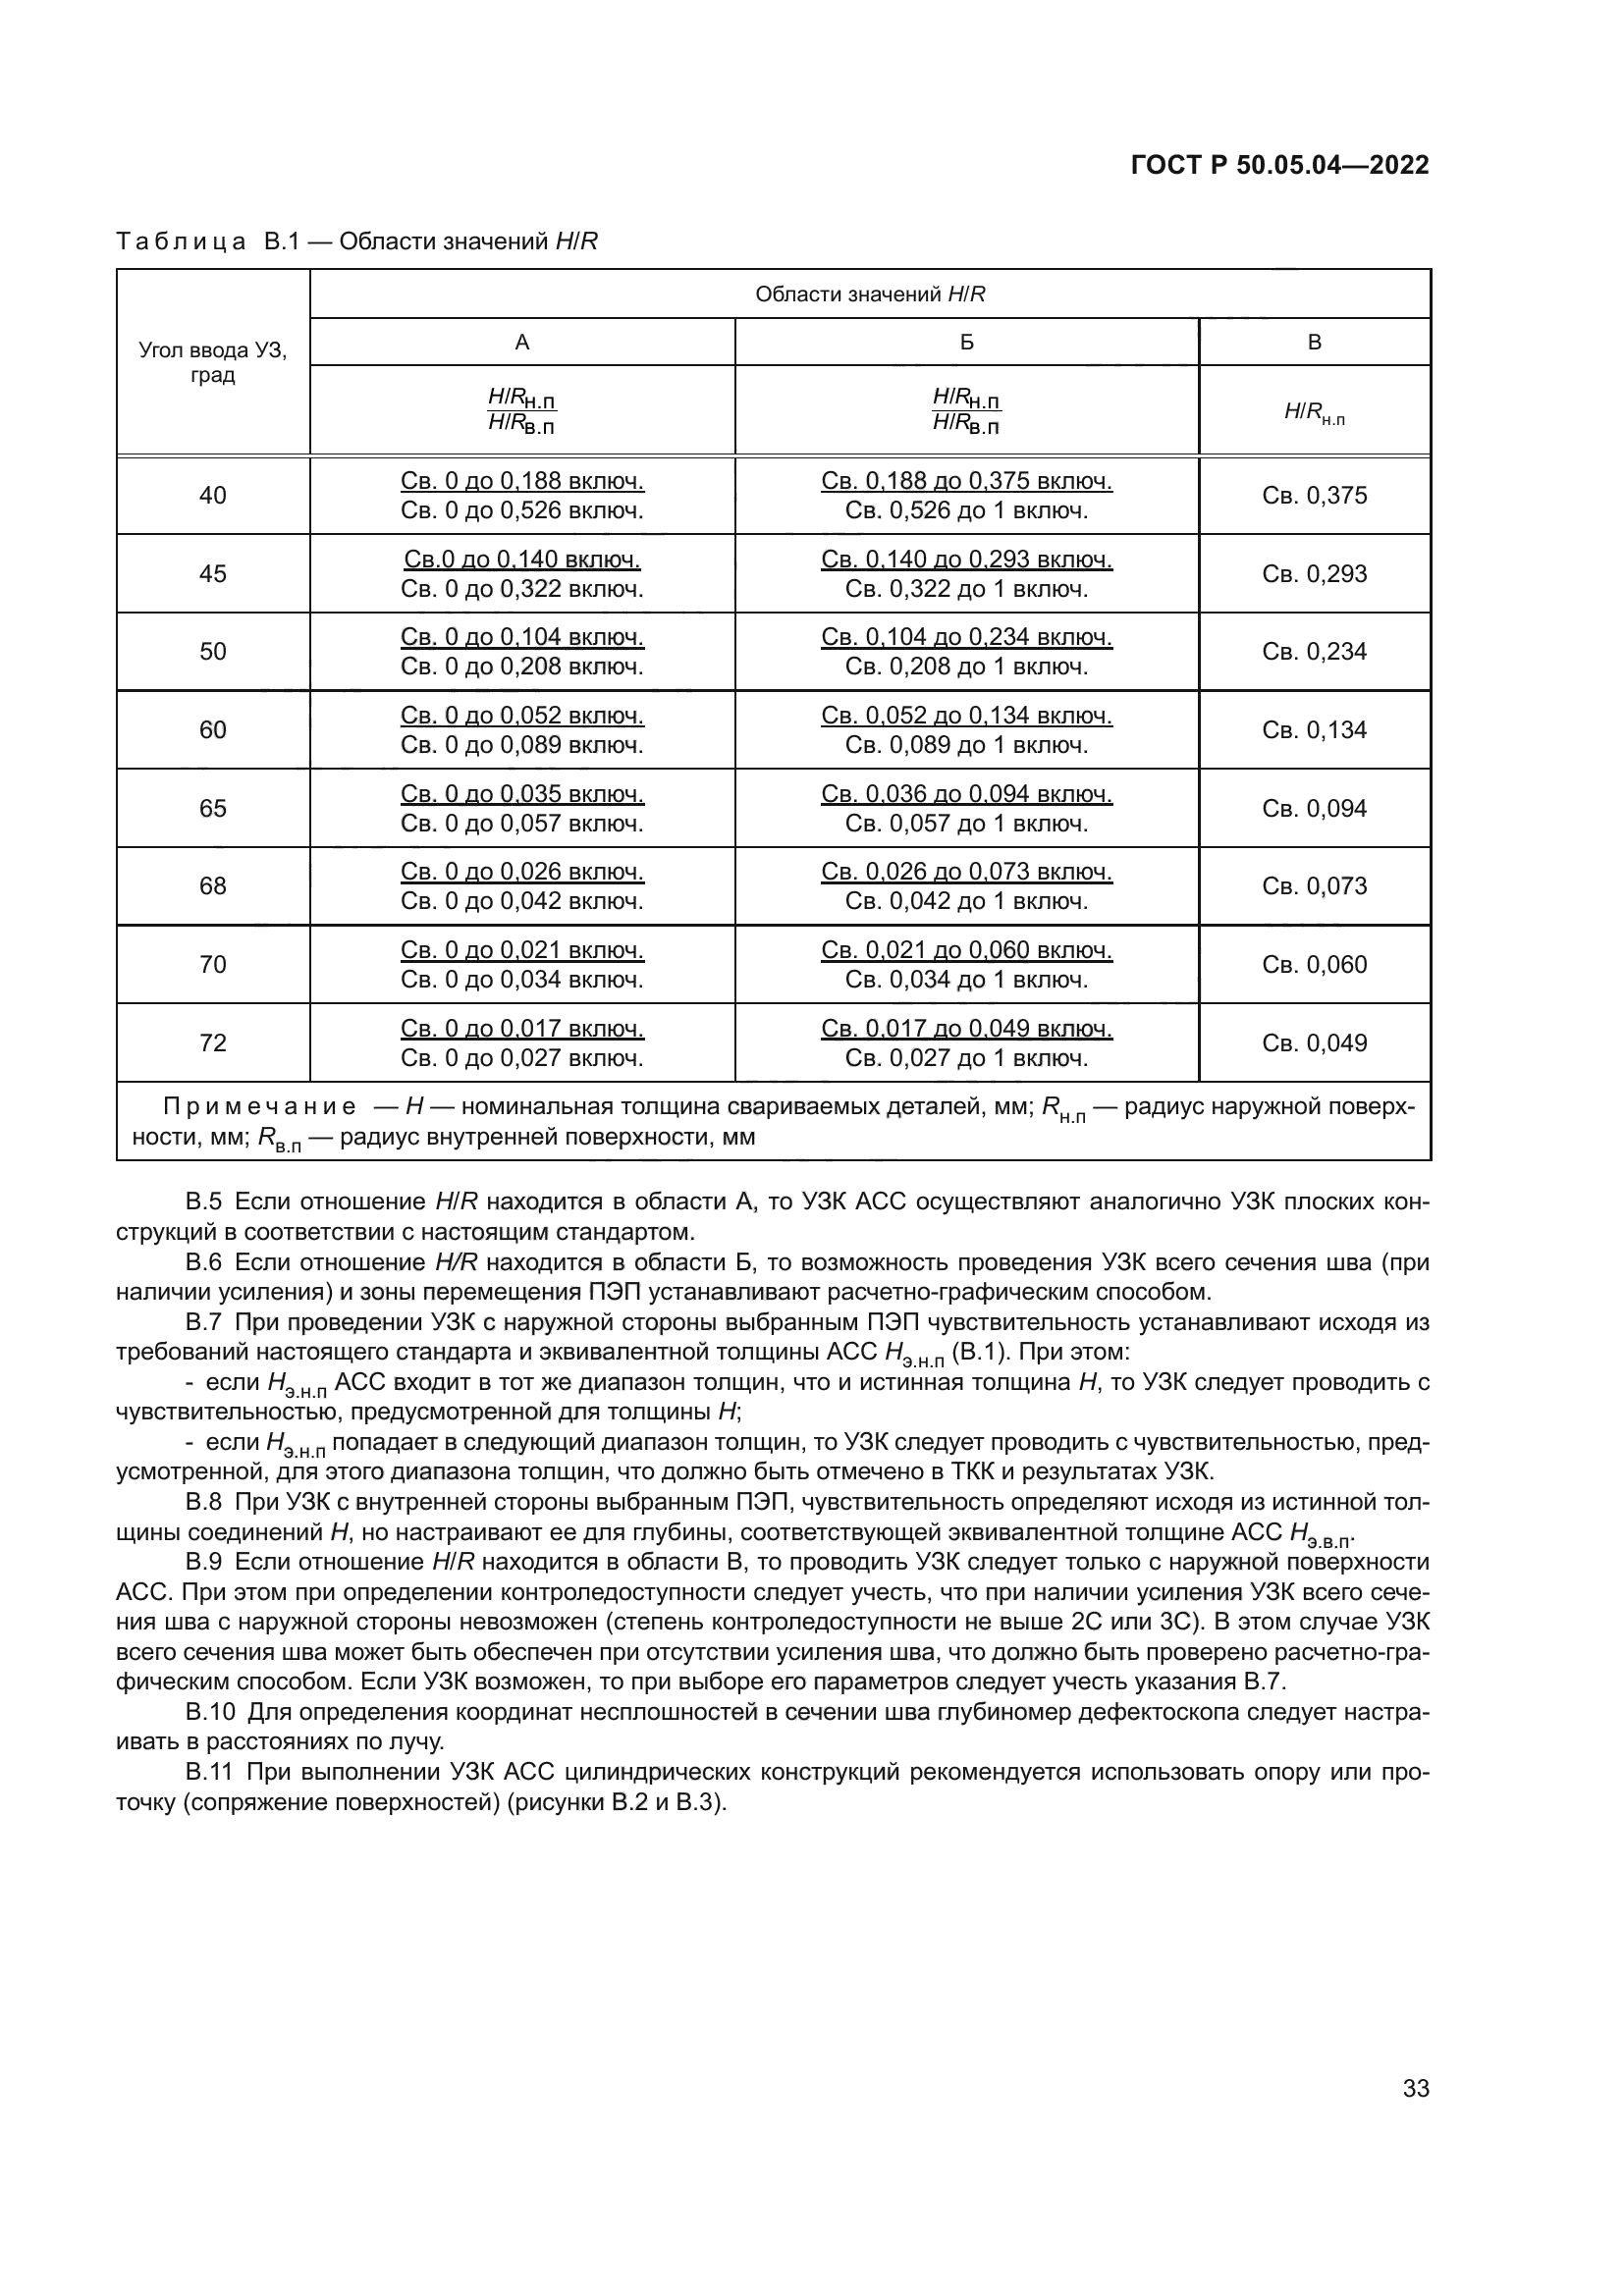 ГОСТ Р 50.05.04-2022